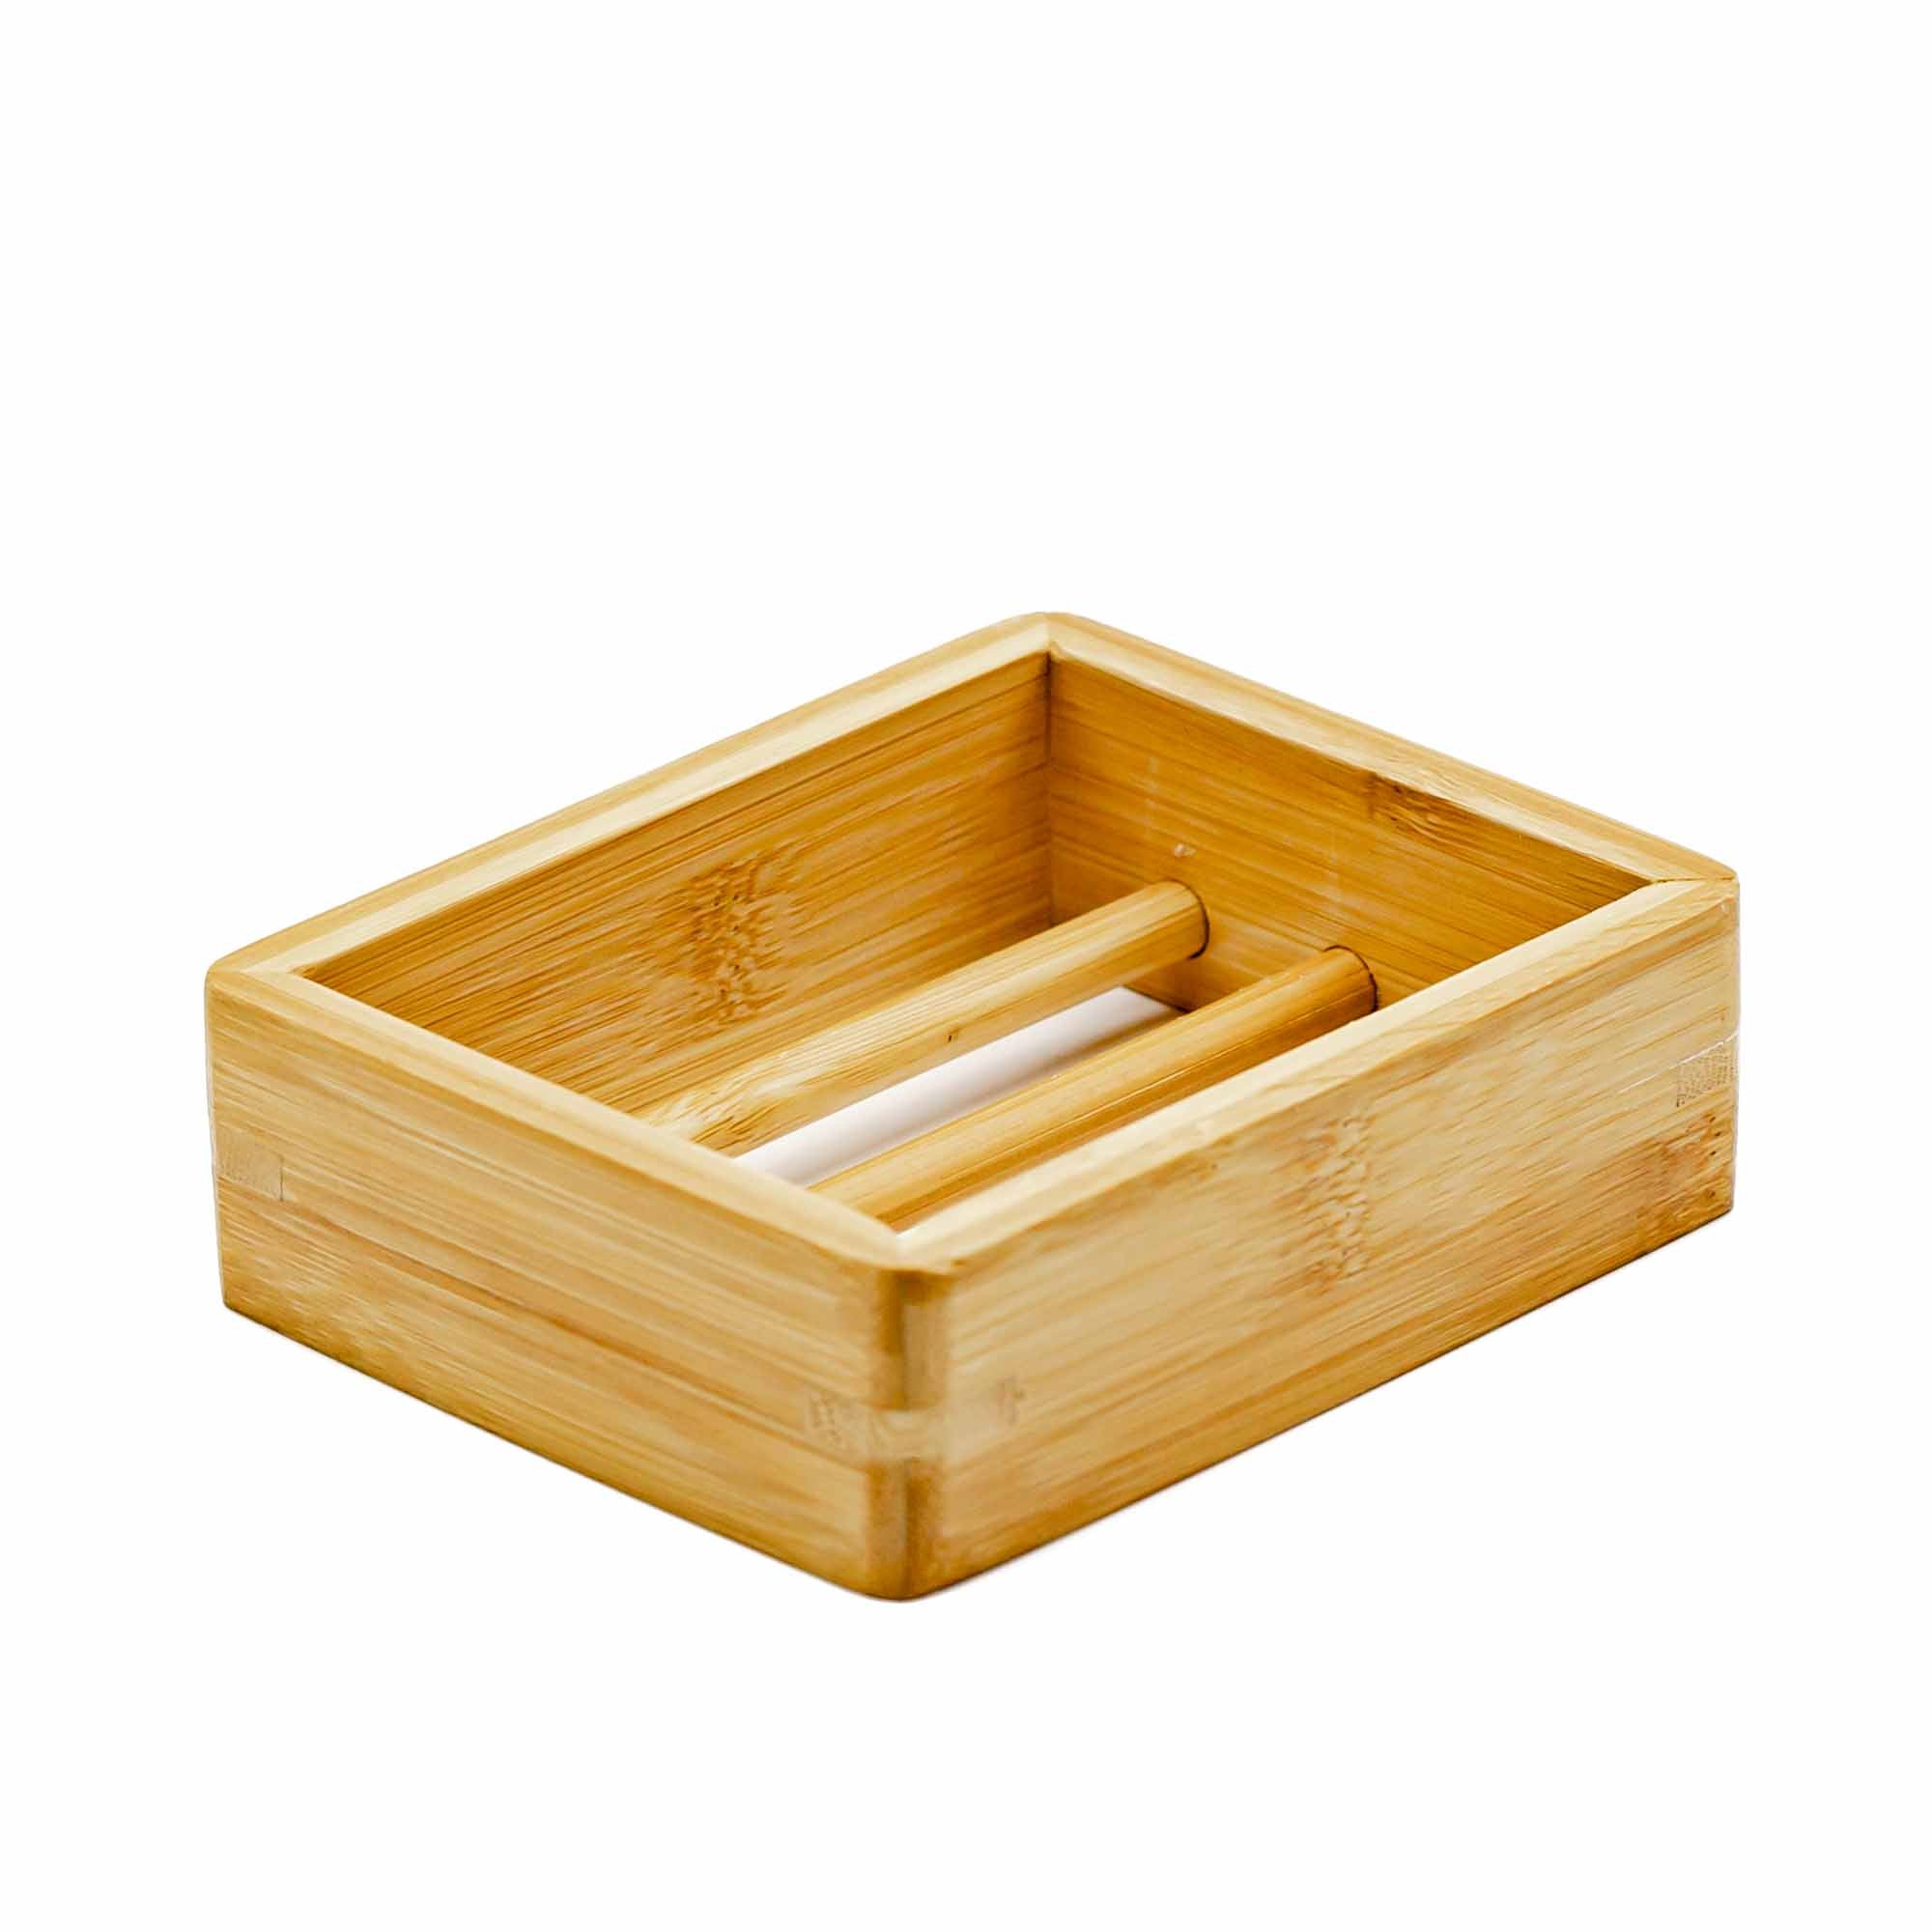 Moso Bamboo Soap Shelf - Mortise And Tenon